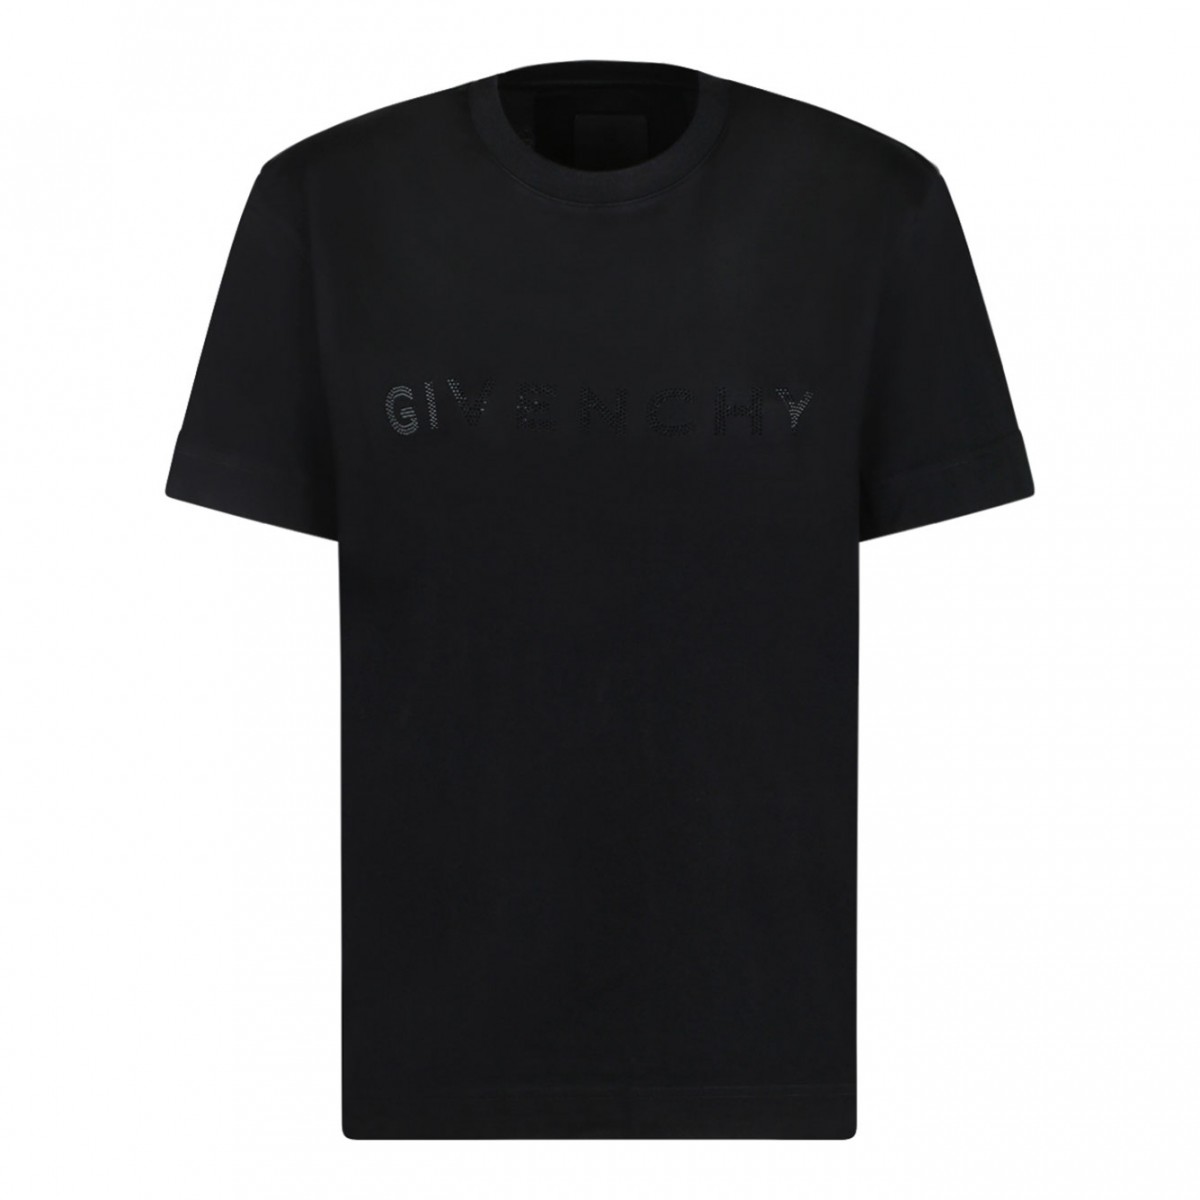 Black Rhinestones T-Shirt